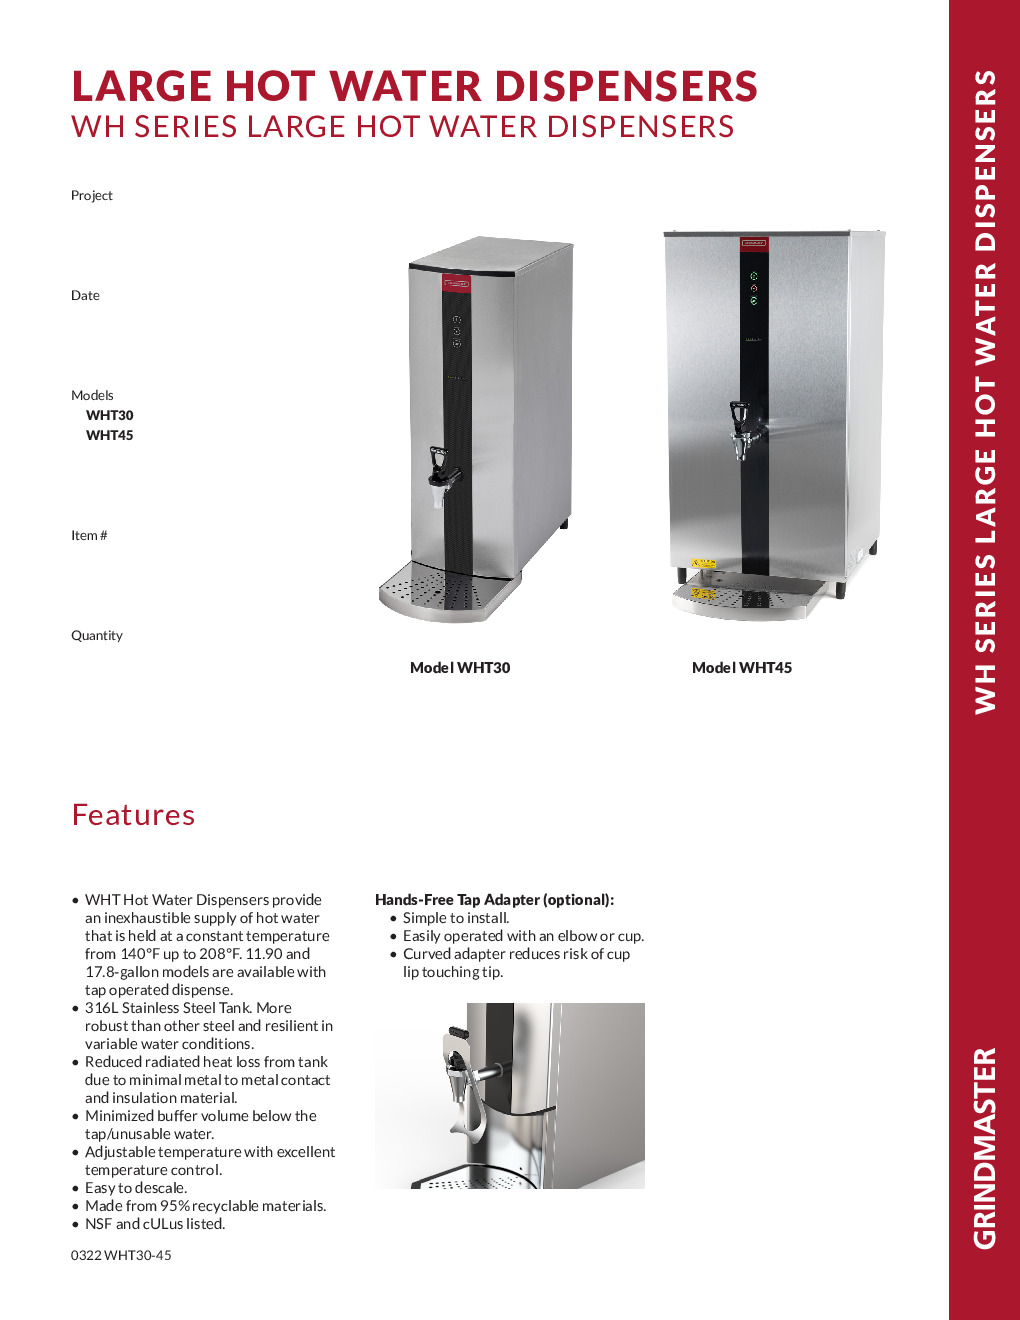 Grindmaster-UNIC-Crathco WHT45-120 Hot Water Dispenser